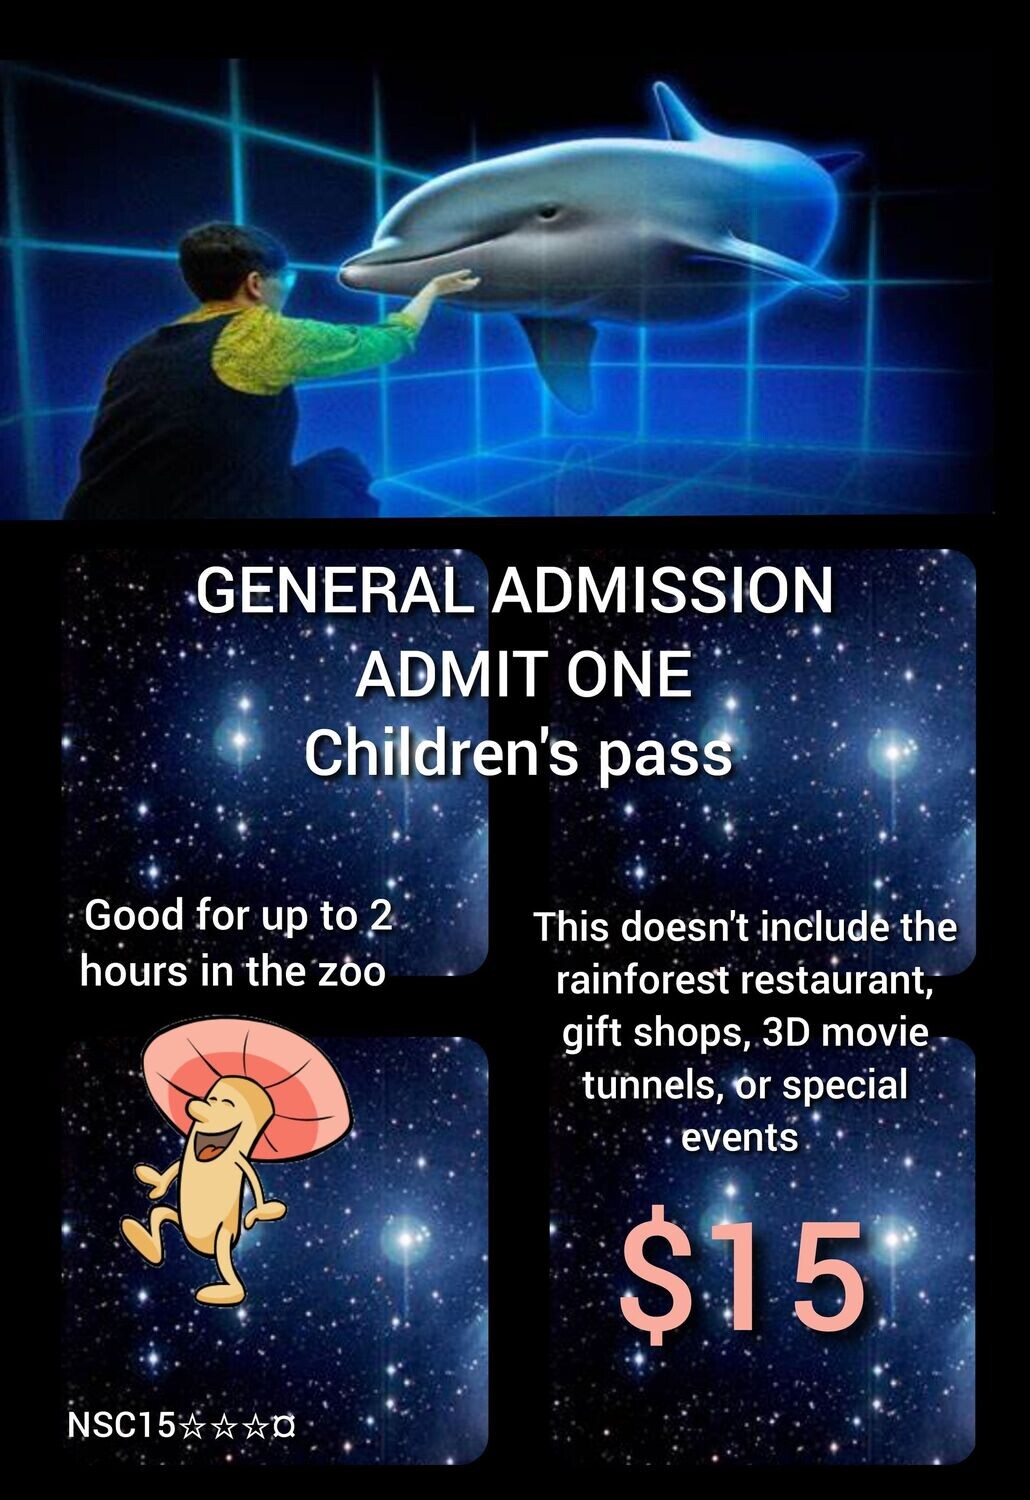 Child's General admission